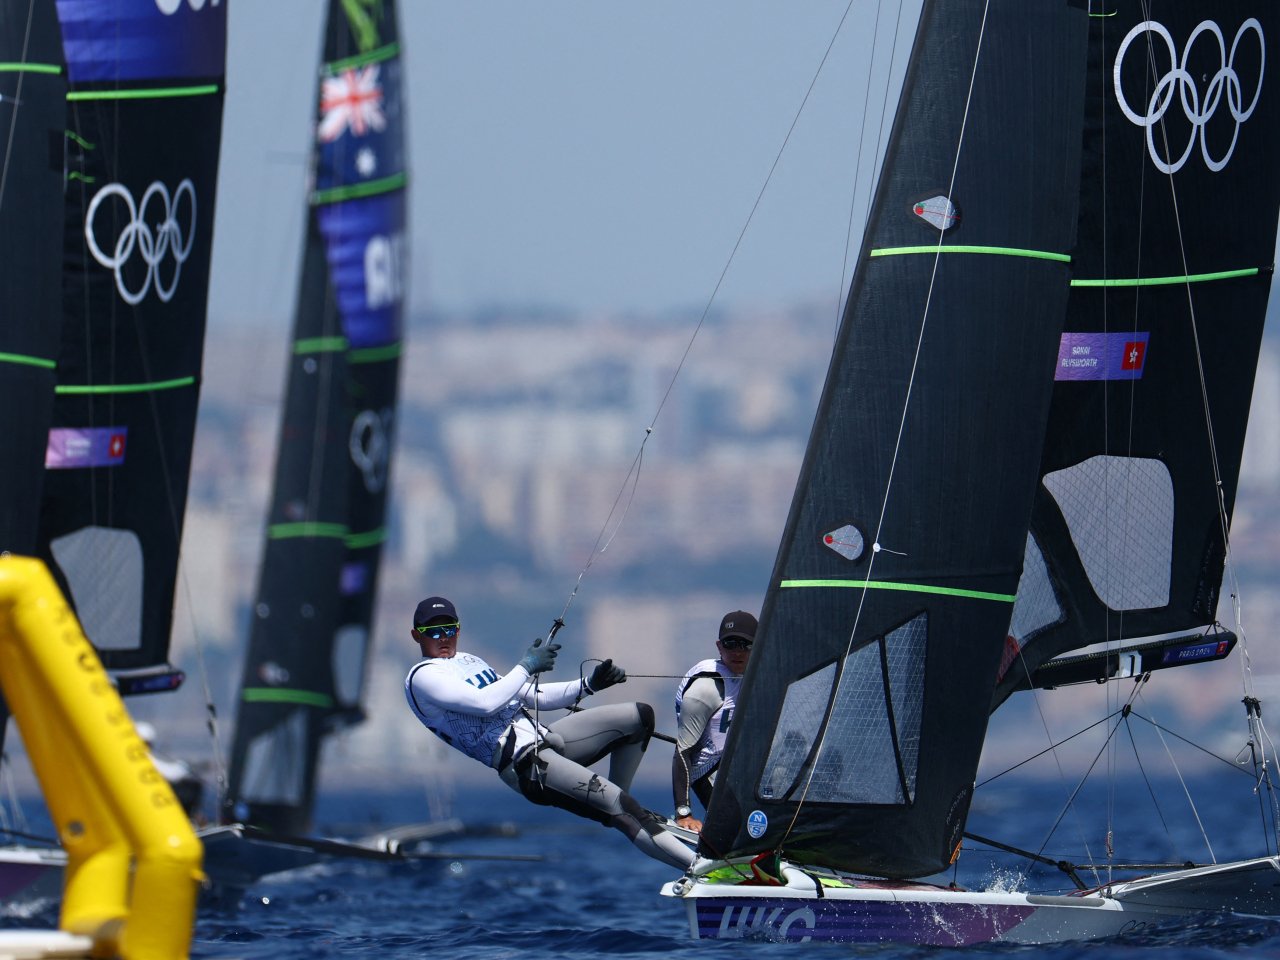 HK skiff sailors struggle on first Olympic race day